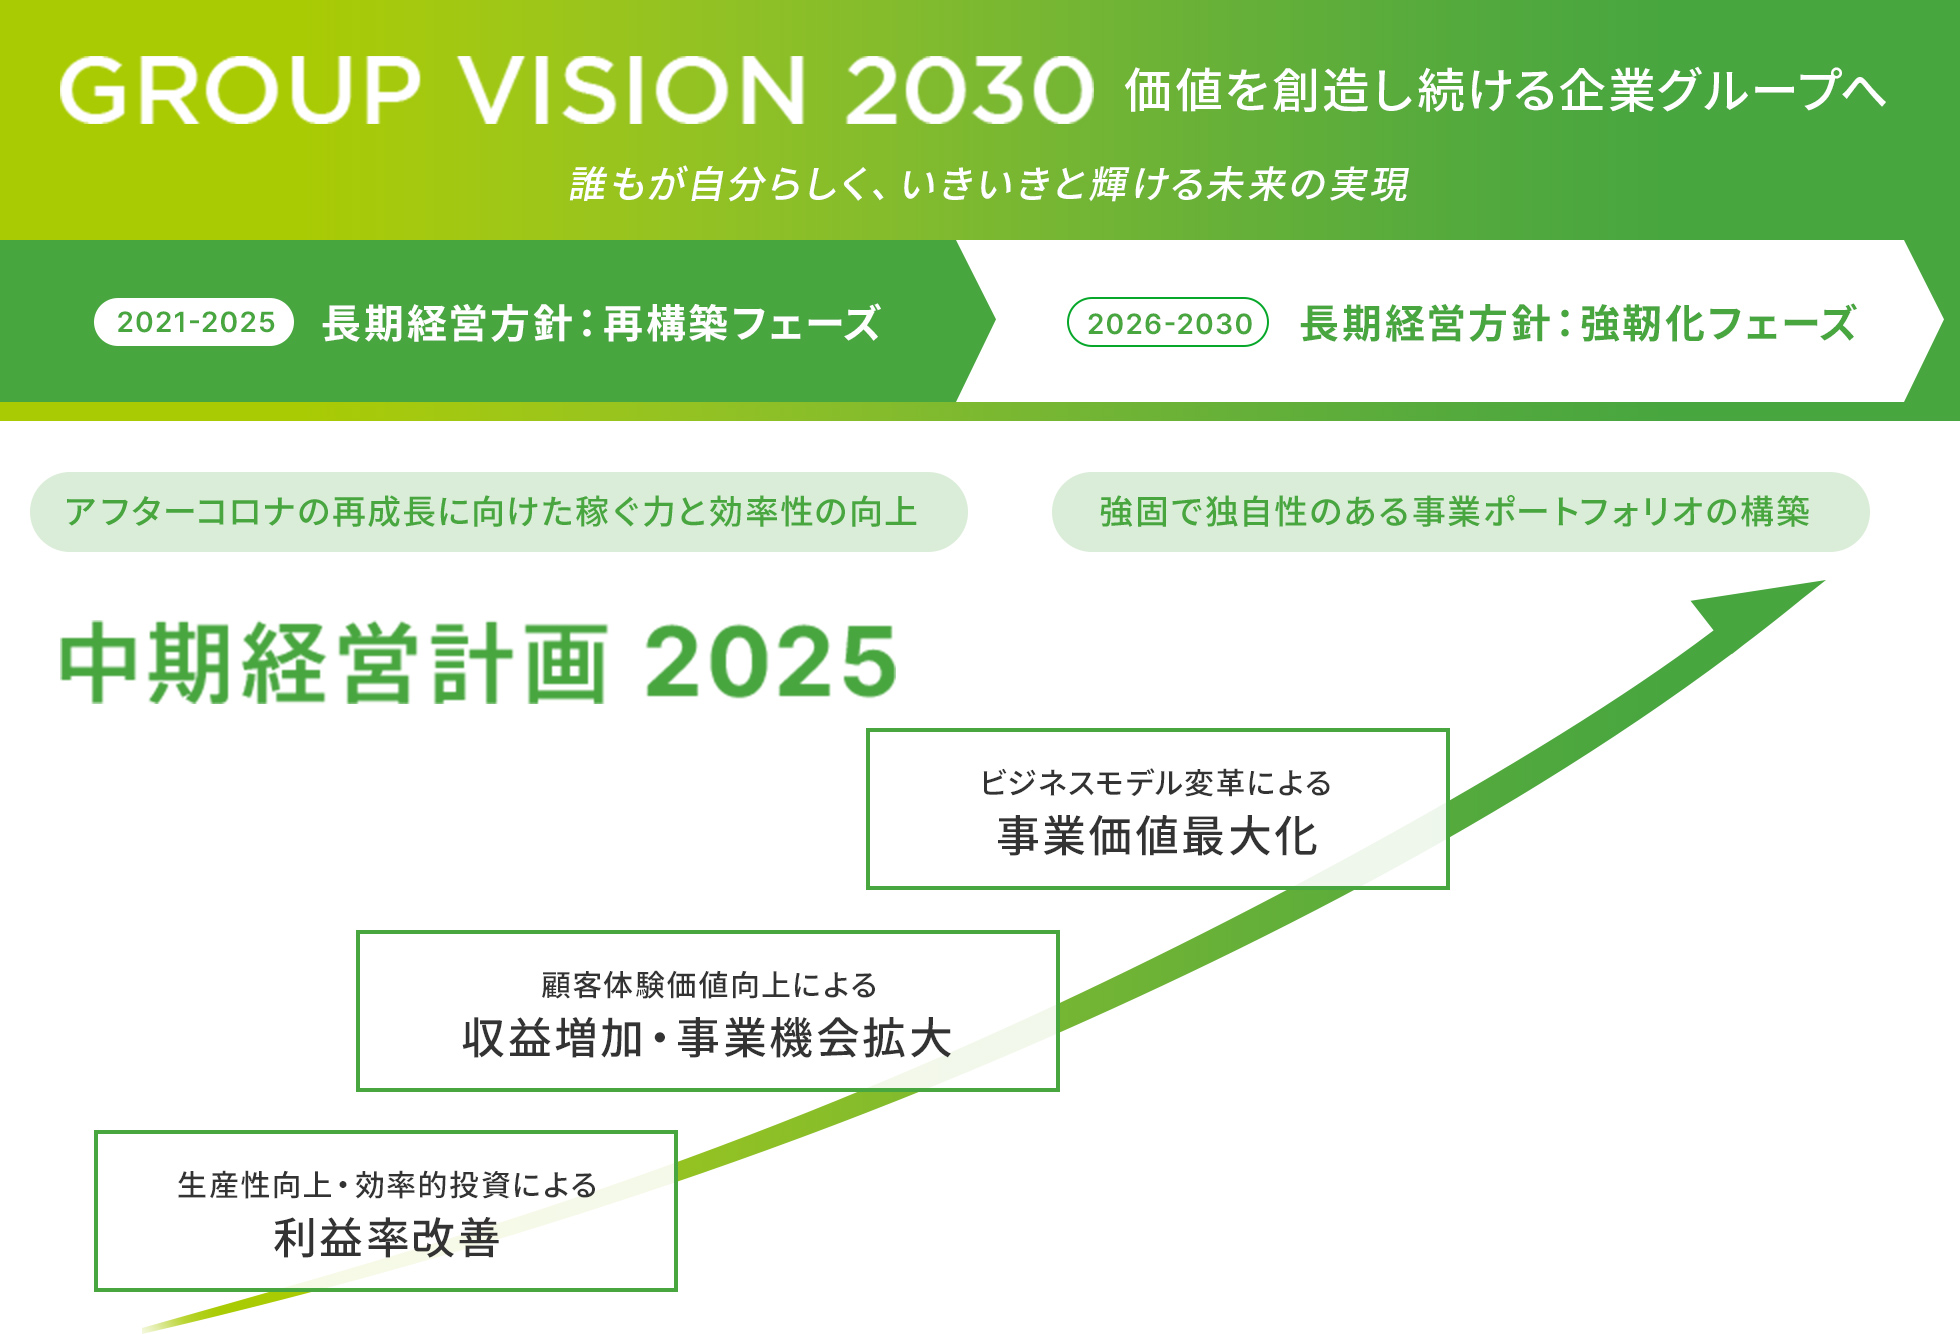 GROUP VISION 2030として、2021年〜2025年は再構築フェーズ、2026年〜2030年は強靭化フェーズといたします。